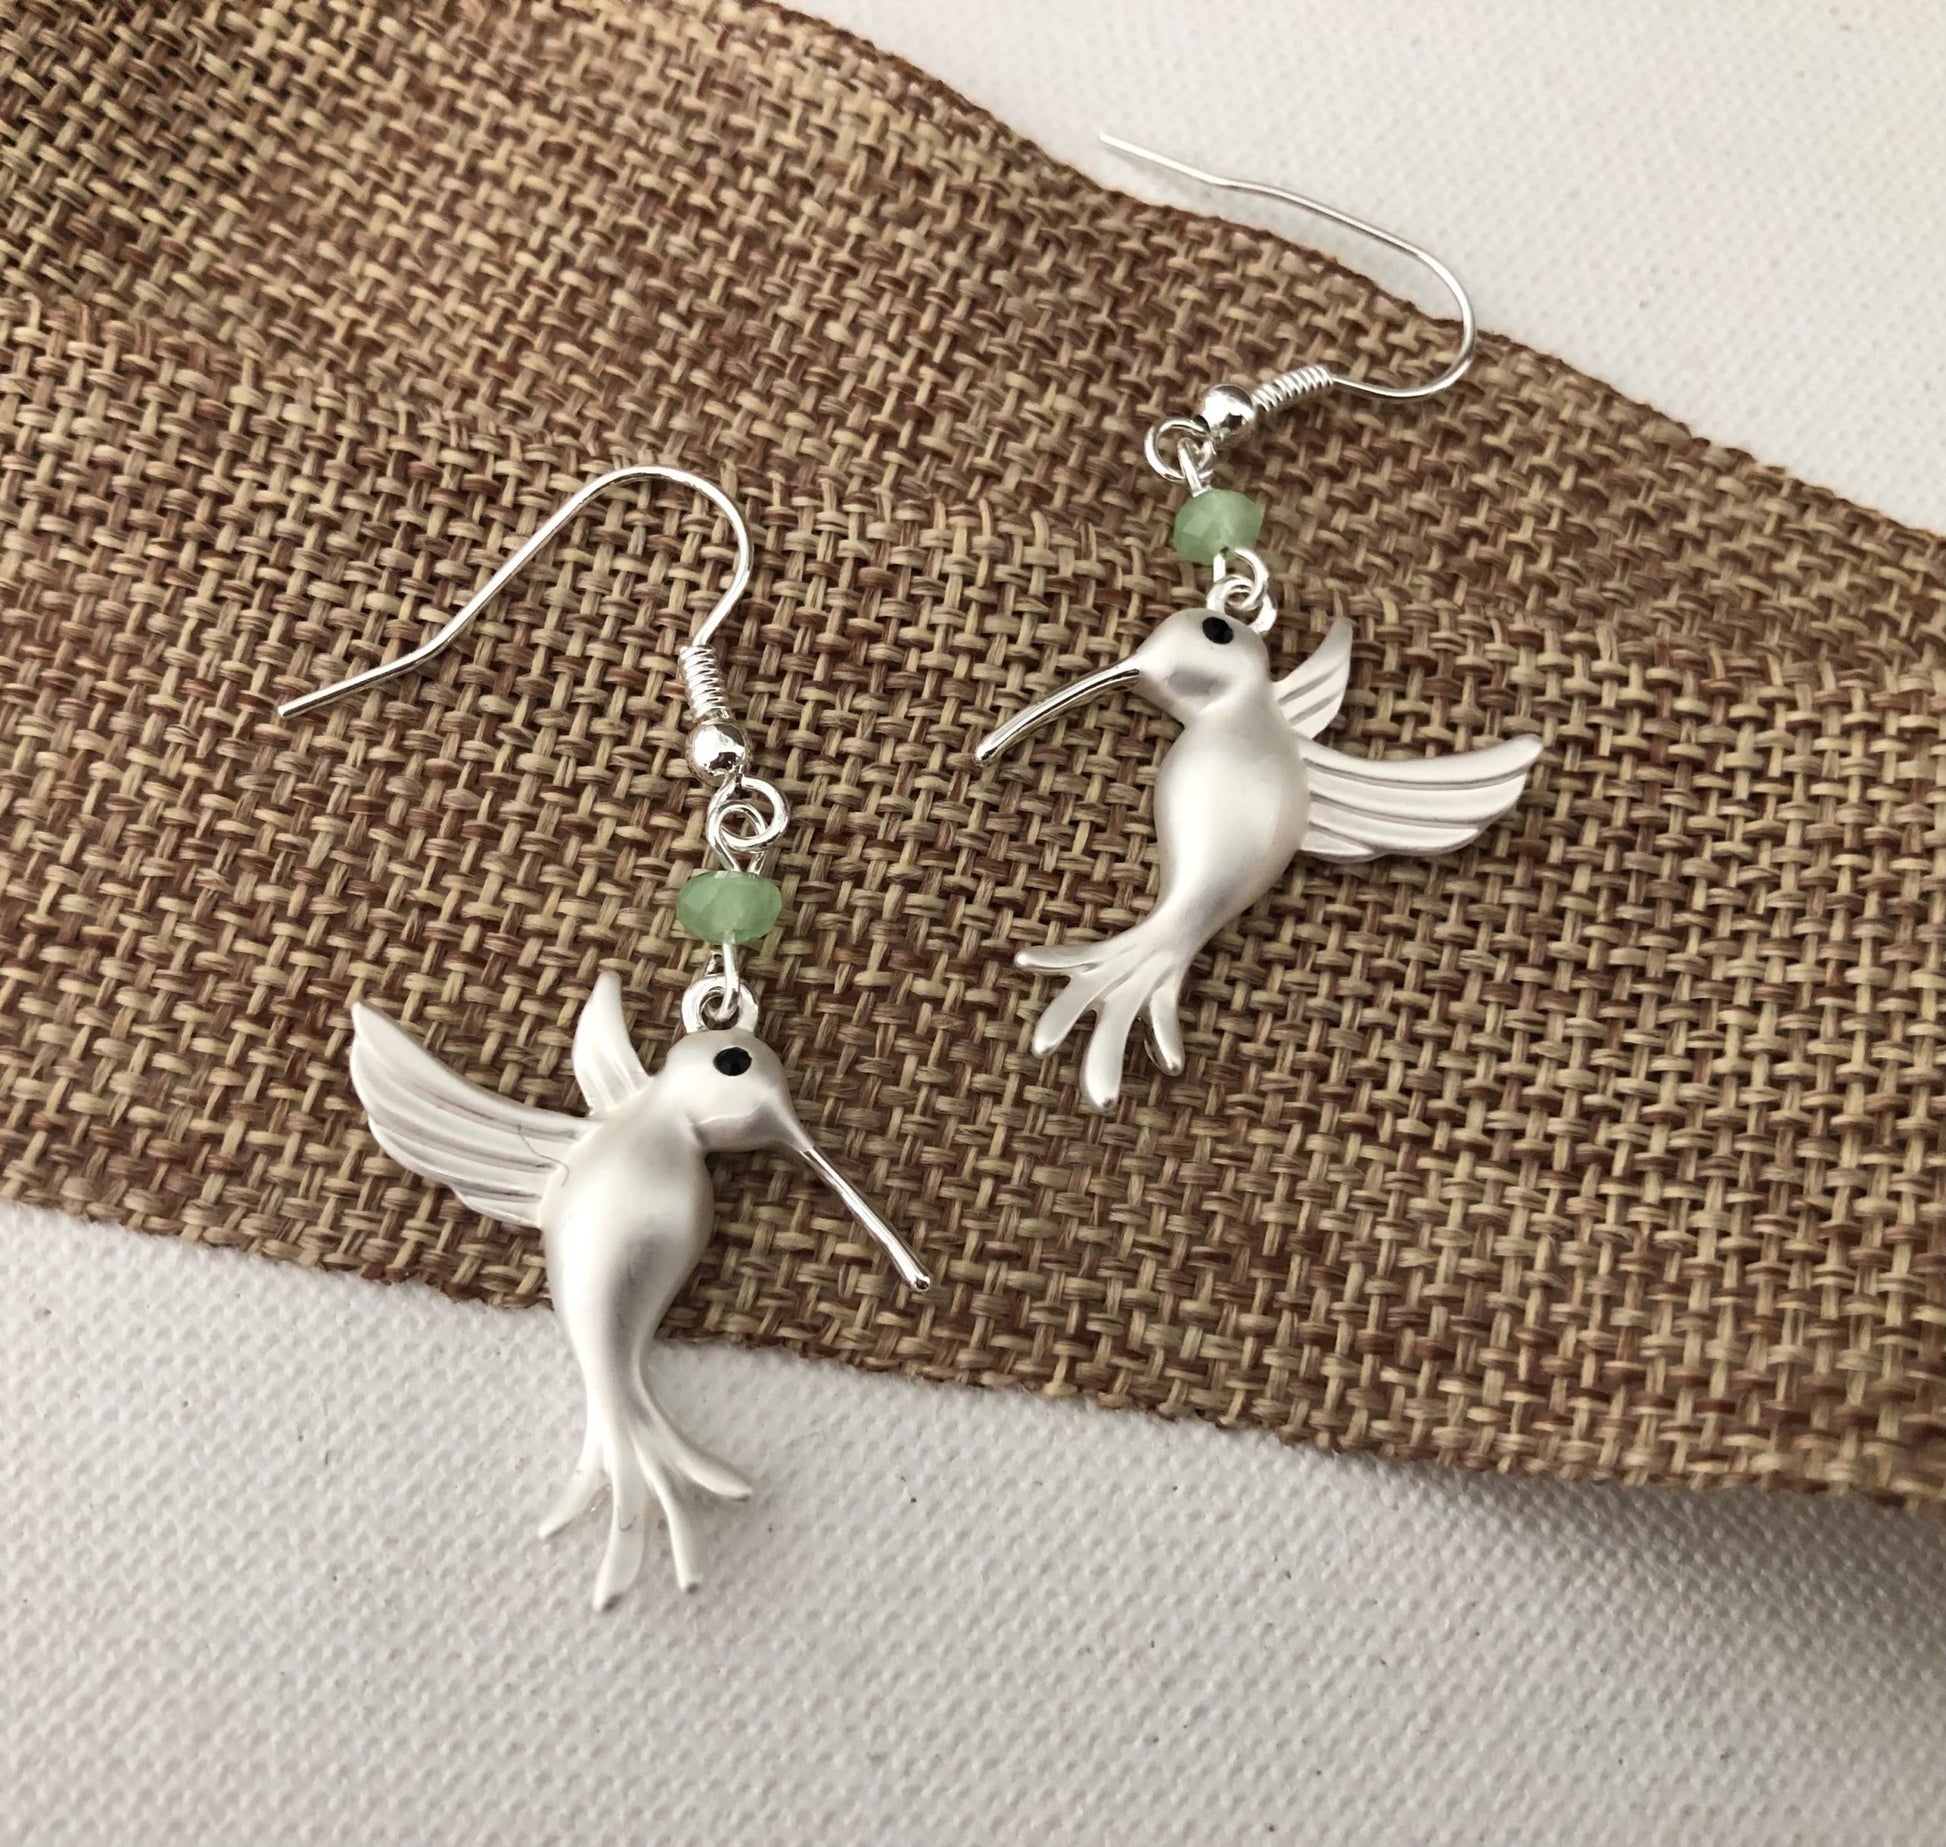 Hummingbird Earrings WIRE- Carol Young Silver